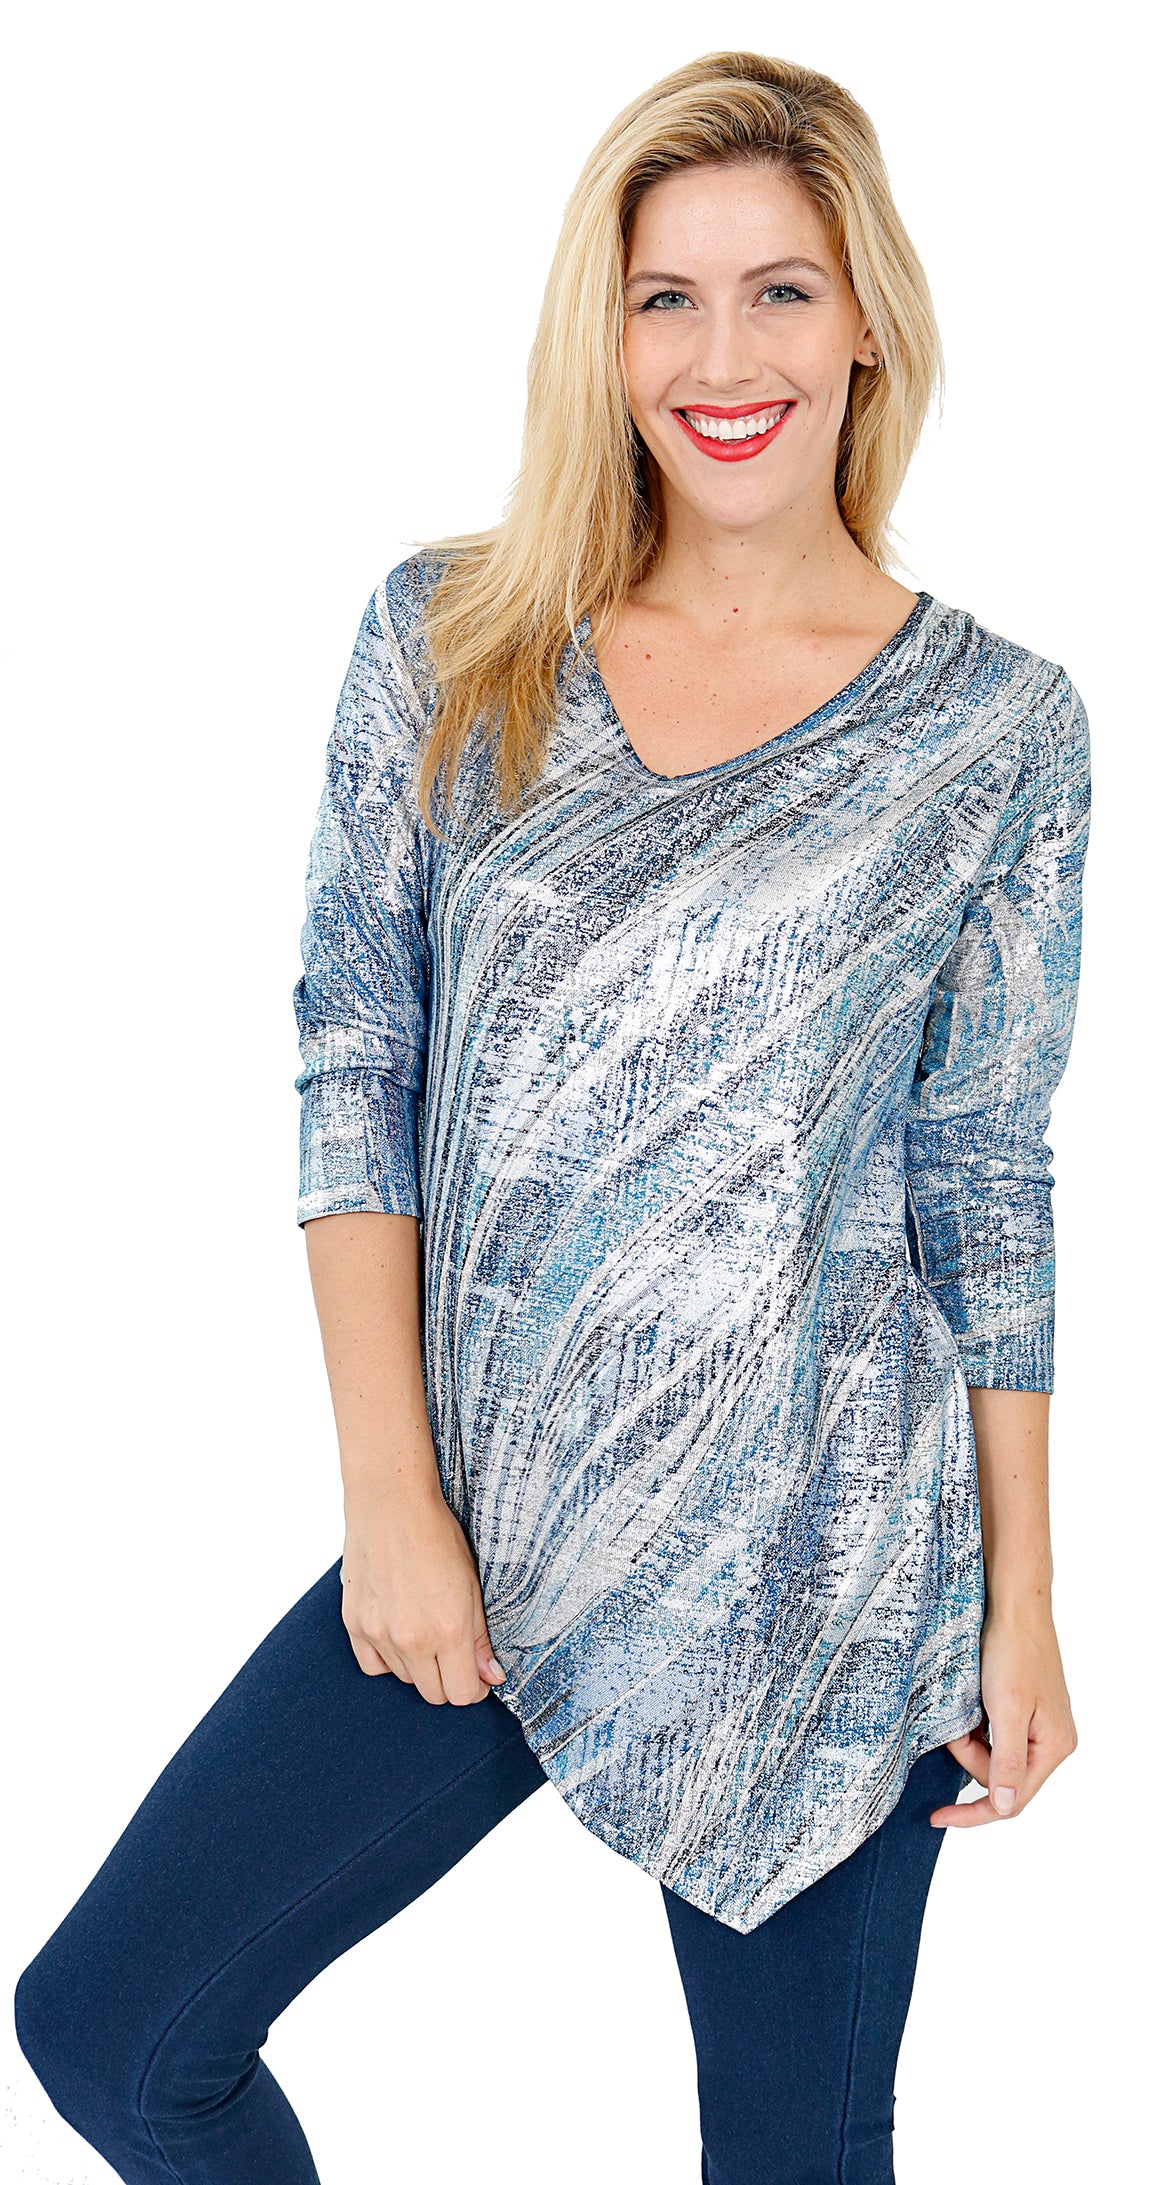 Impulse California Women's Asymmetrical Blue Waves Sweater